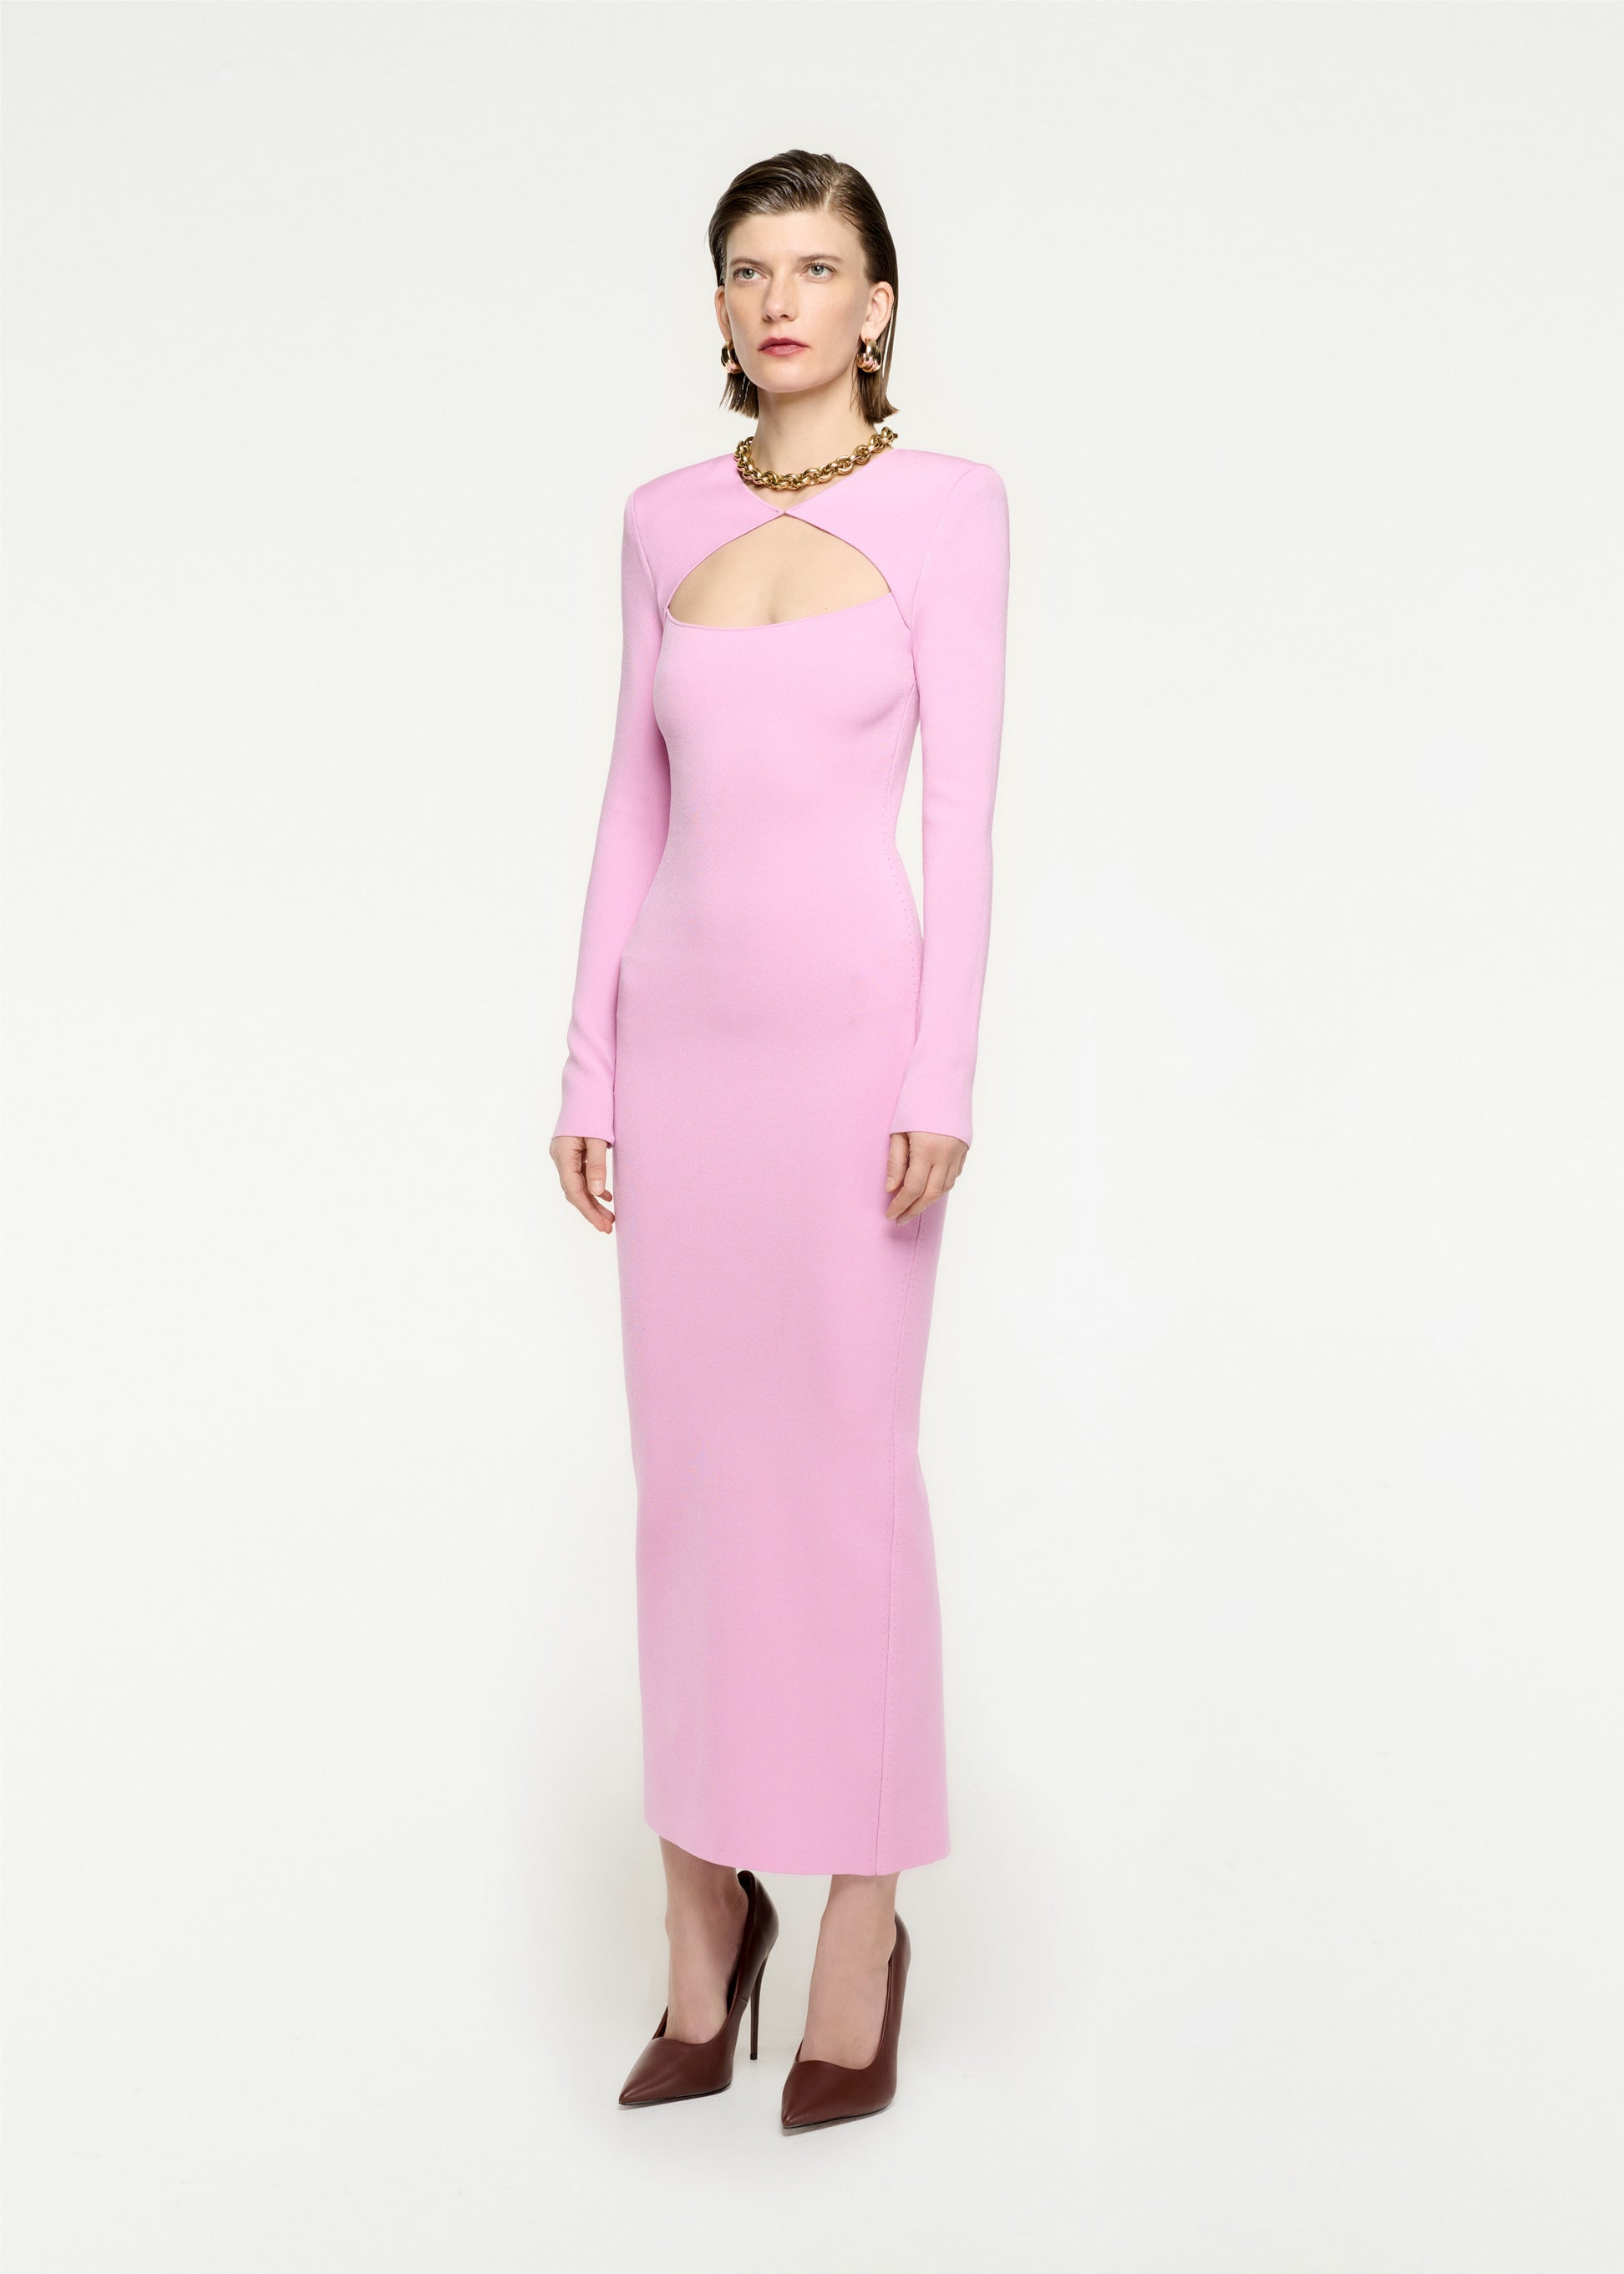 Woman wearing the Long Sleeve Knit Midi Dress in Pink